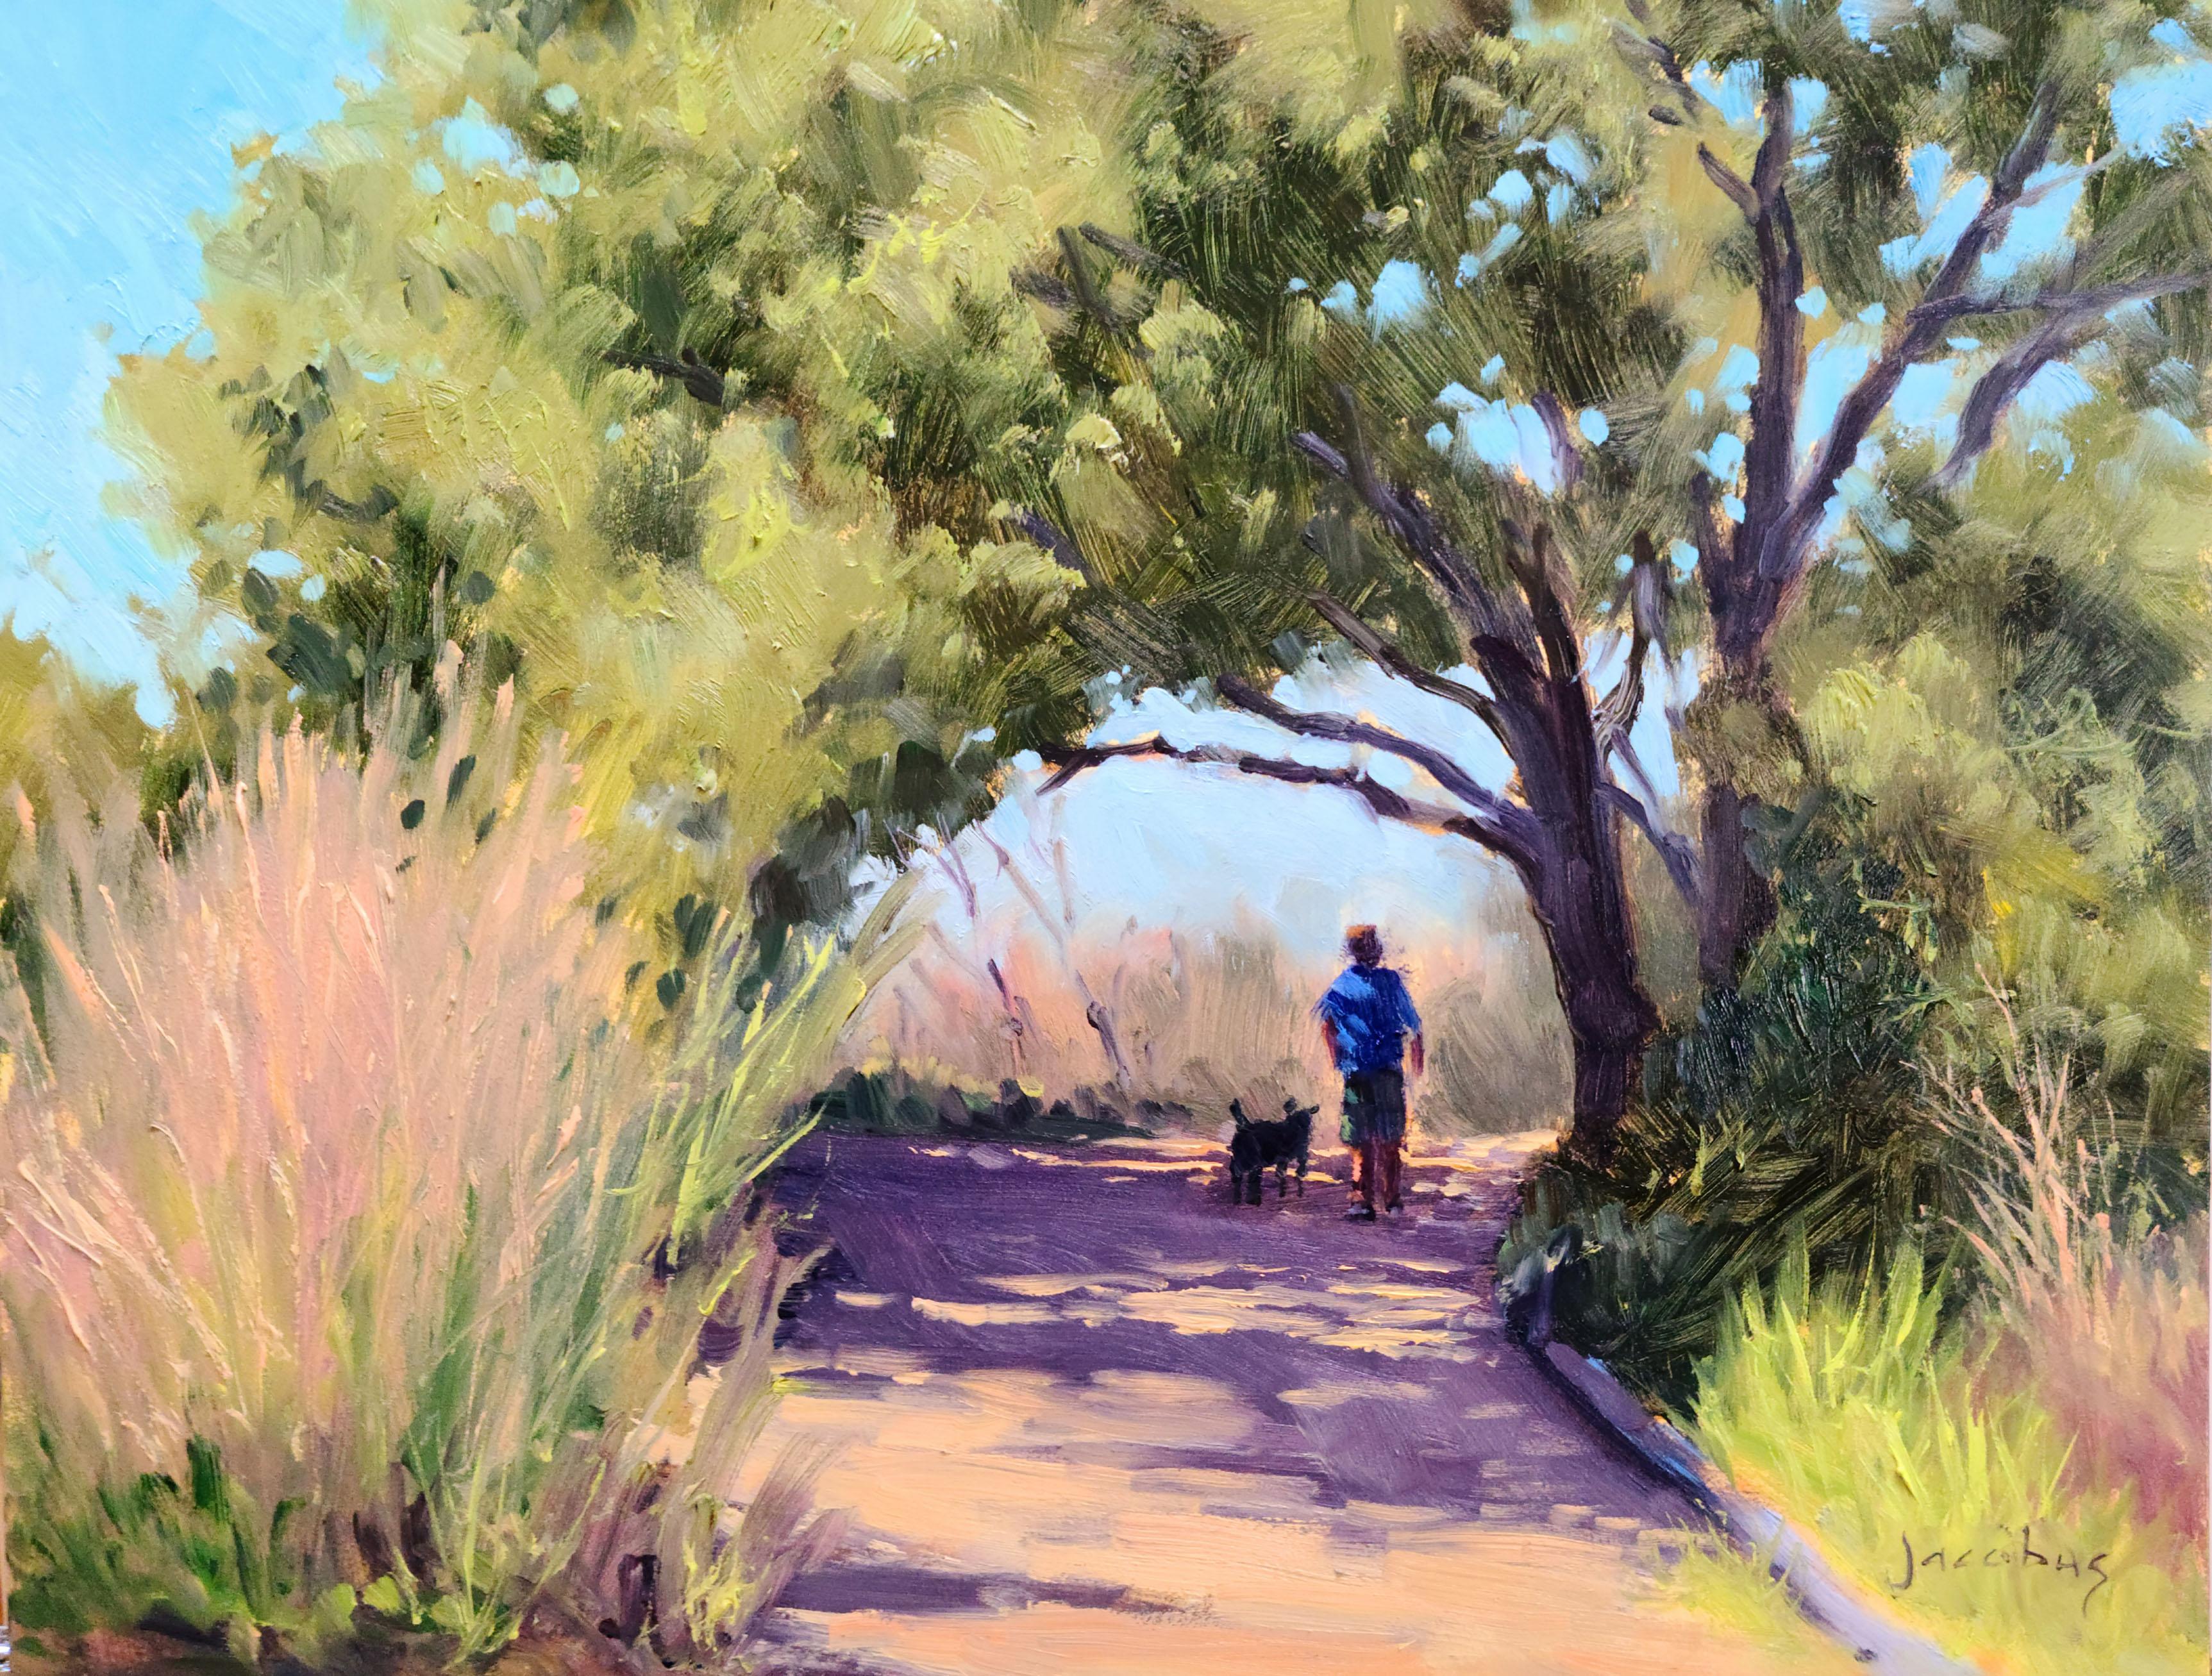 Jacobus Baas Landscape Painting - "Walking The Dog" Southern California Coastal Scene